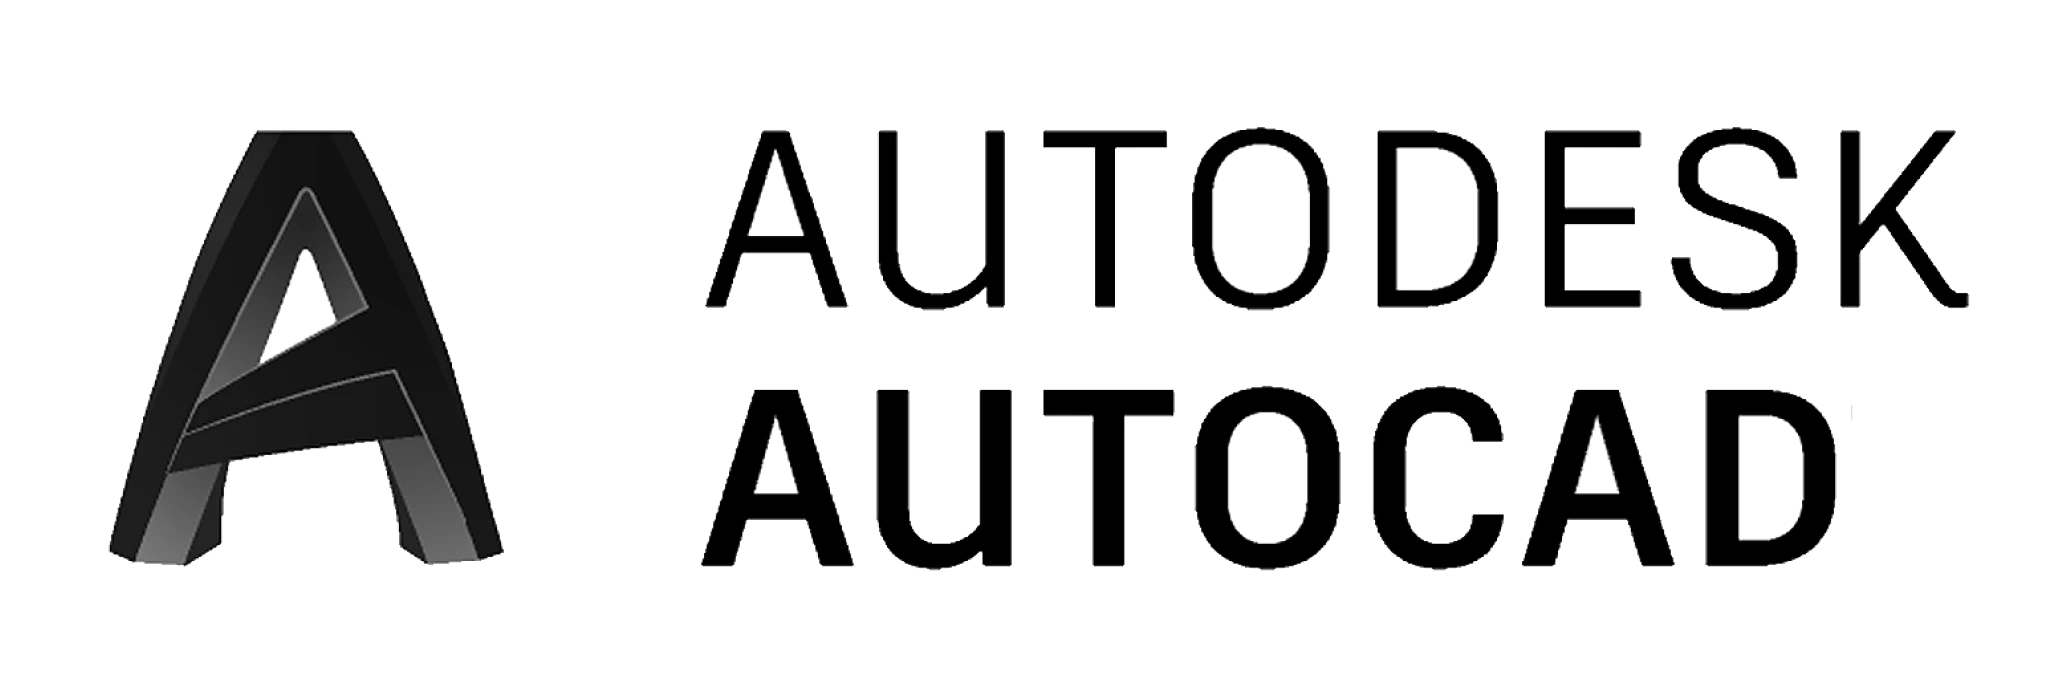 auto-cad-logo.webp